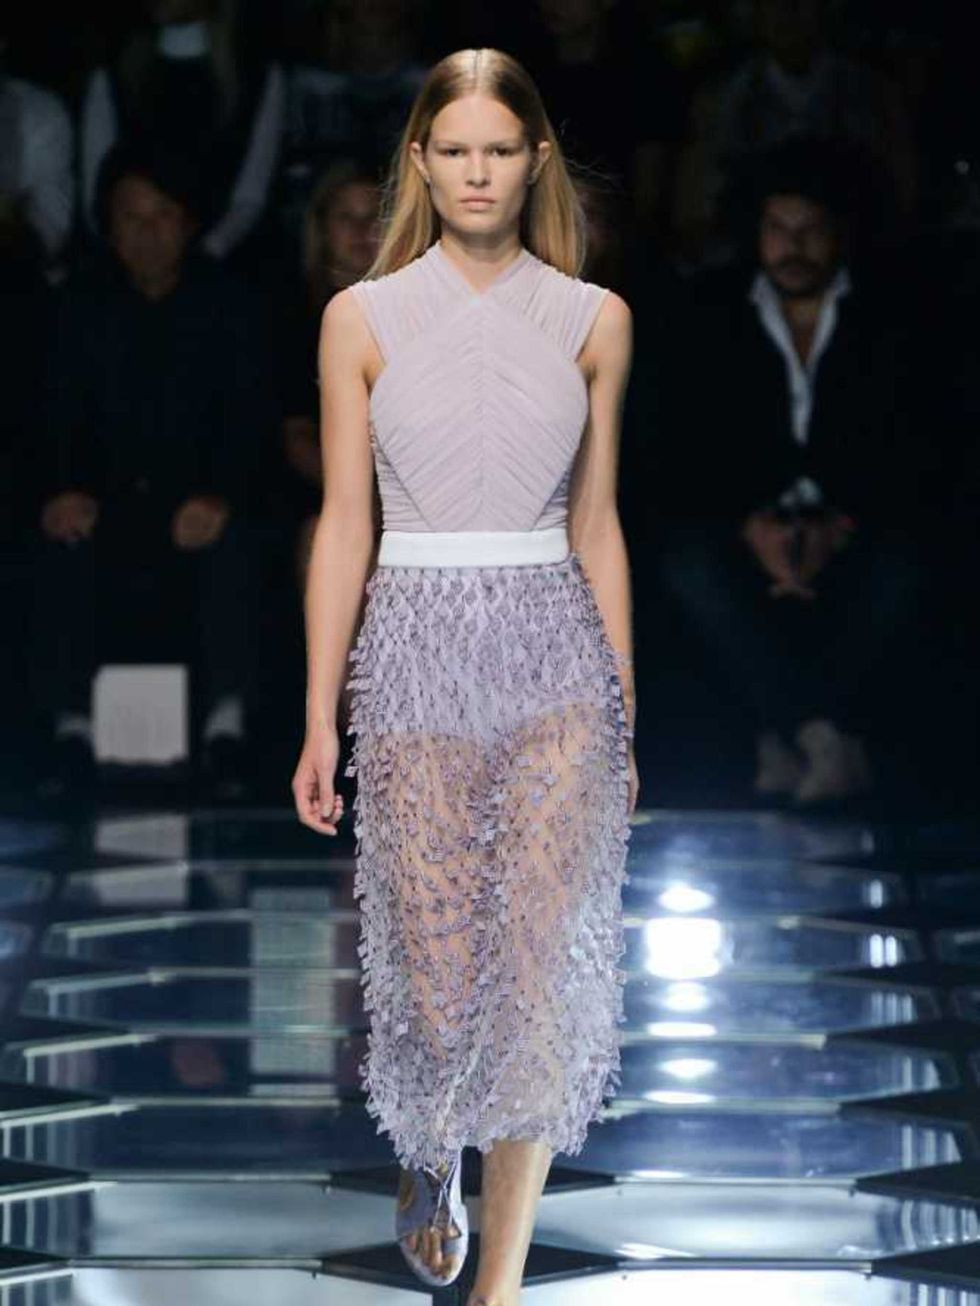 <p>This <a href="http://www.elleuk.com/catwalk/balenciaga/spring-summer-2015">Balenciaga</a> dress is both pretty and quirky - perfect for <a href="http://www.elleuk.com/fashion/celebrity-style/keira-knightley-style-file#image=1">Keira Knightley</a>'s ecl